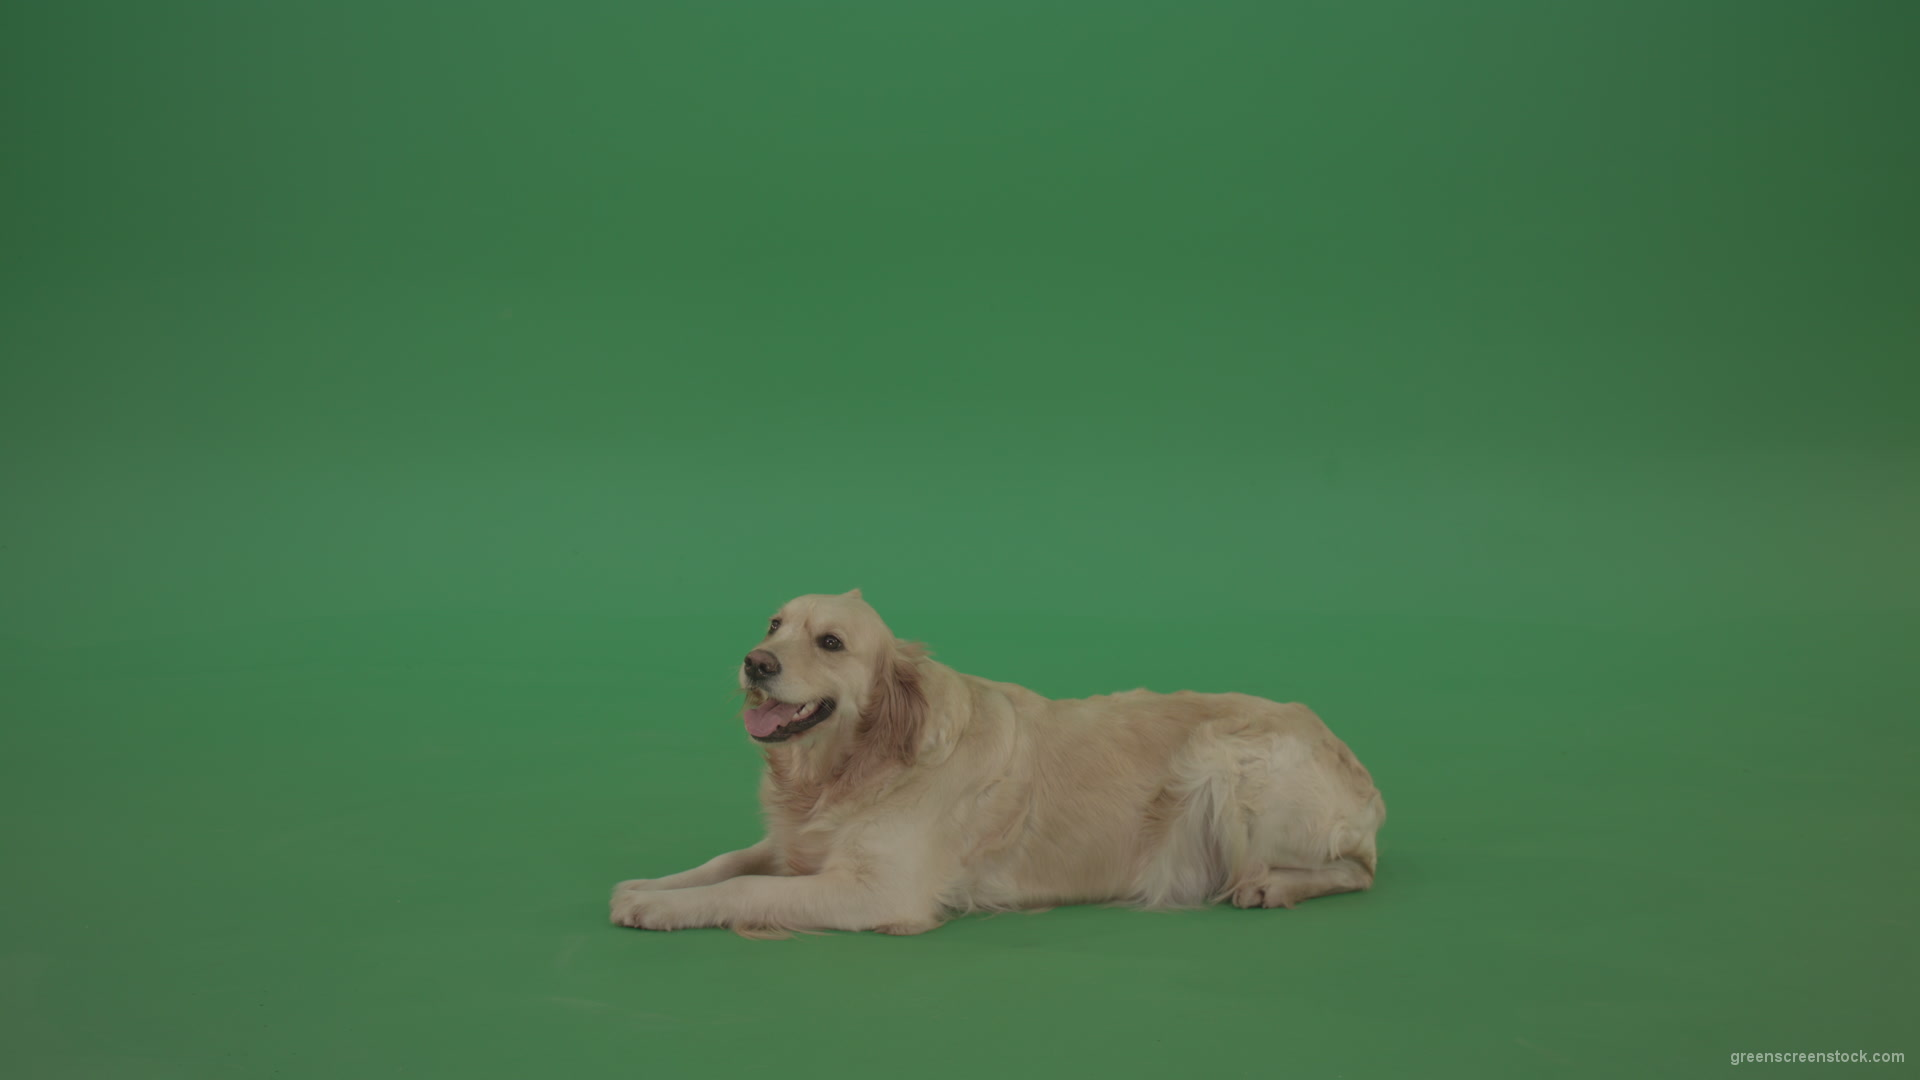 Golden-Retriever-Gun-Dog-Bird-Dog-lying-green-floor-isolated-on-green-screen_002 Green Screen Stock